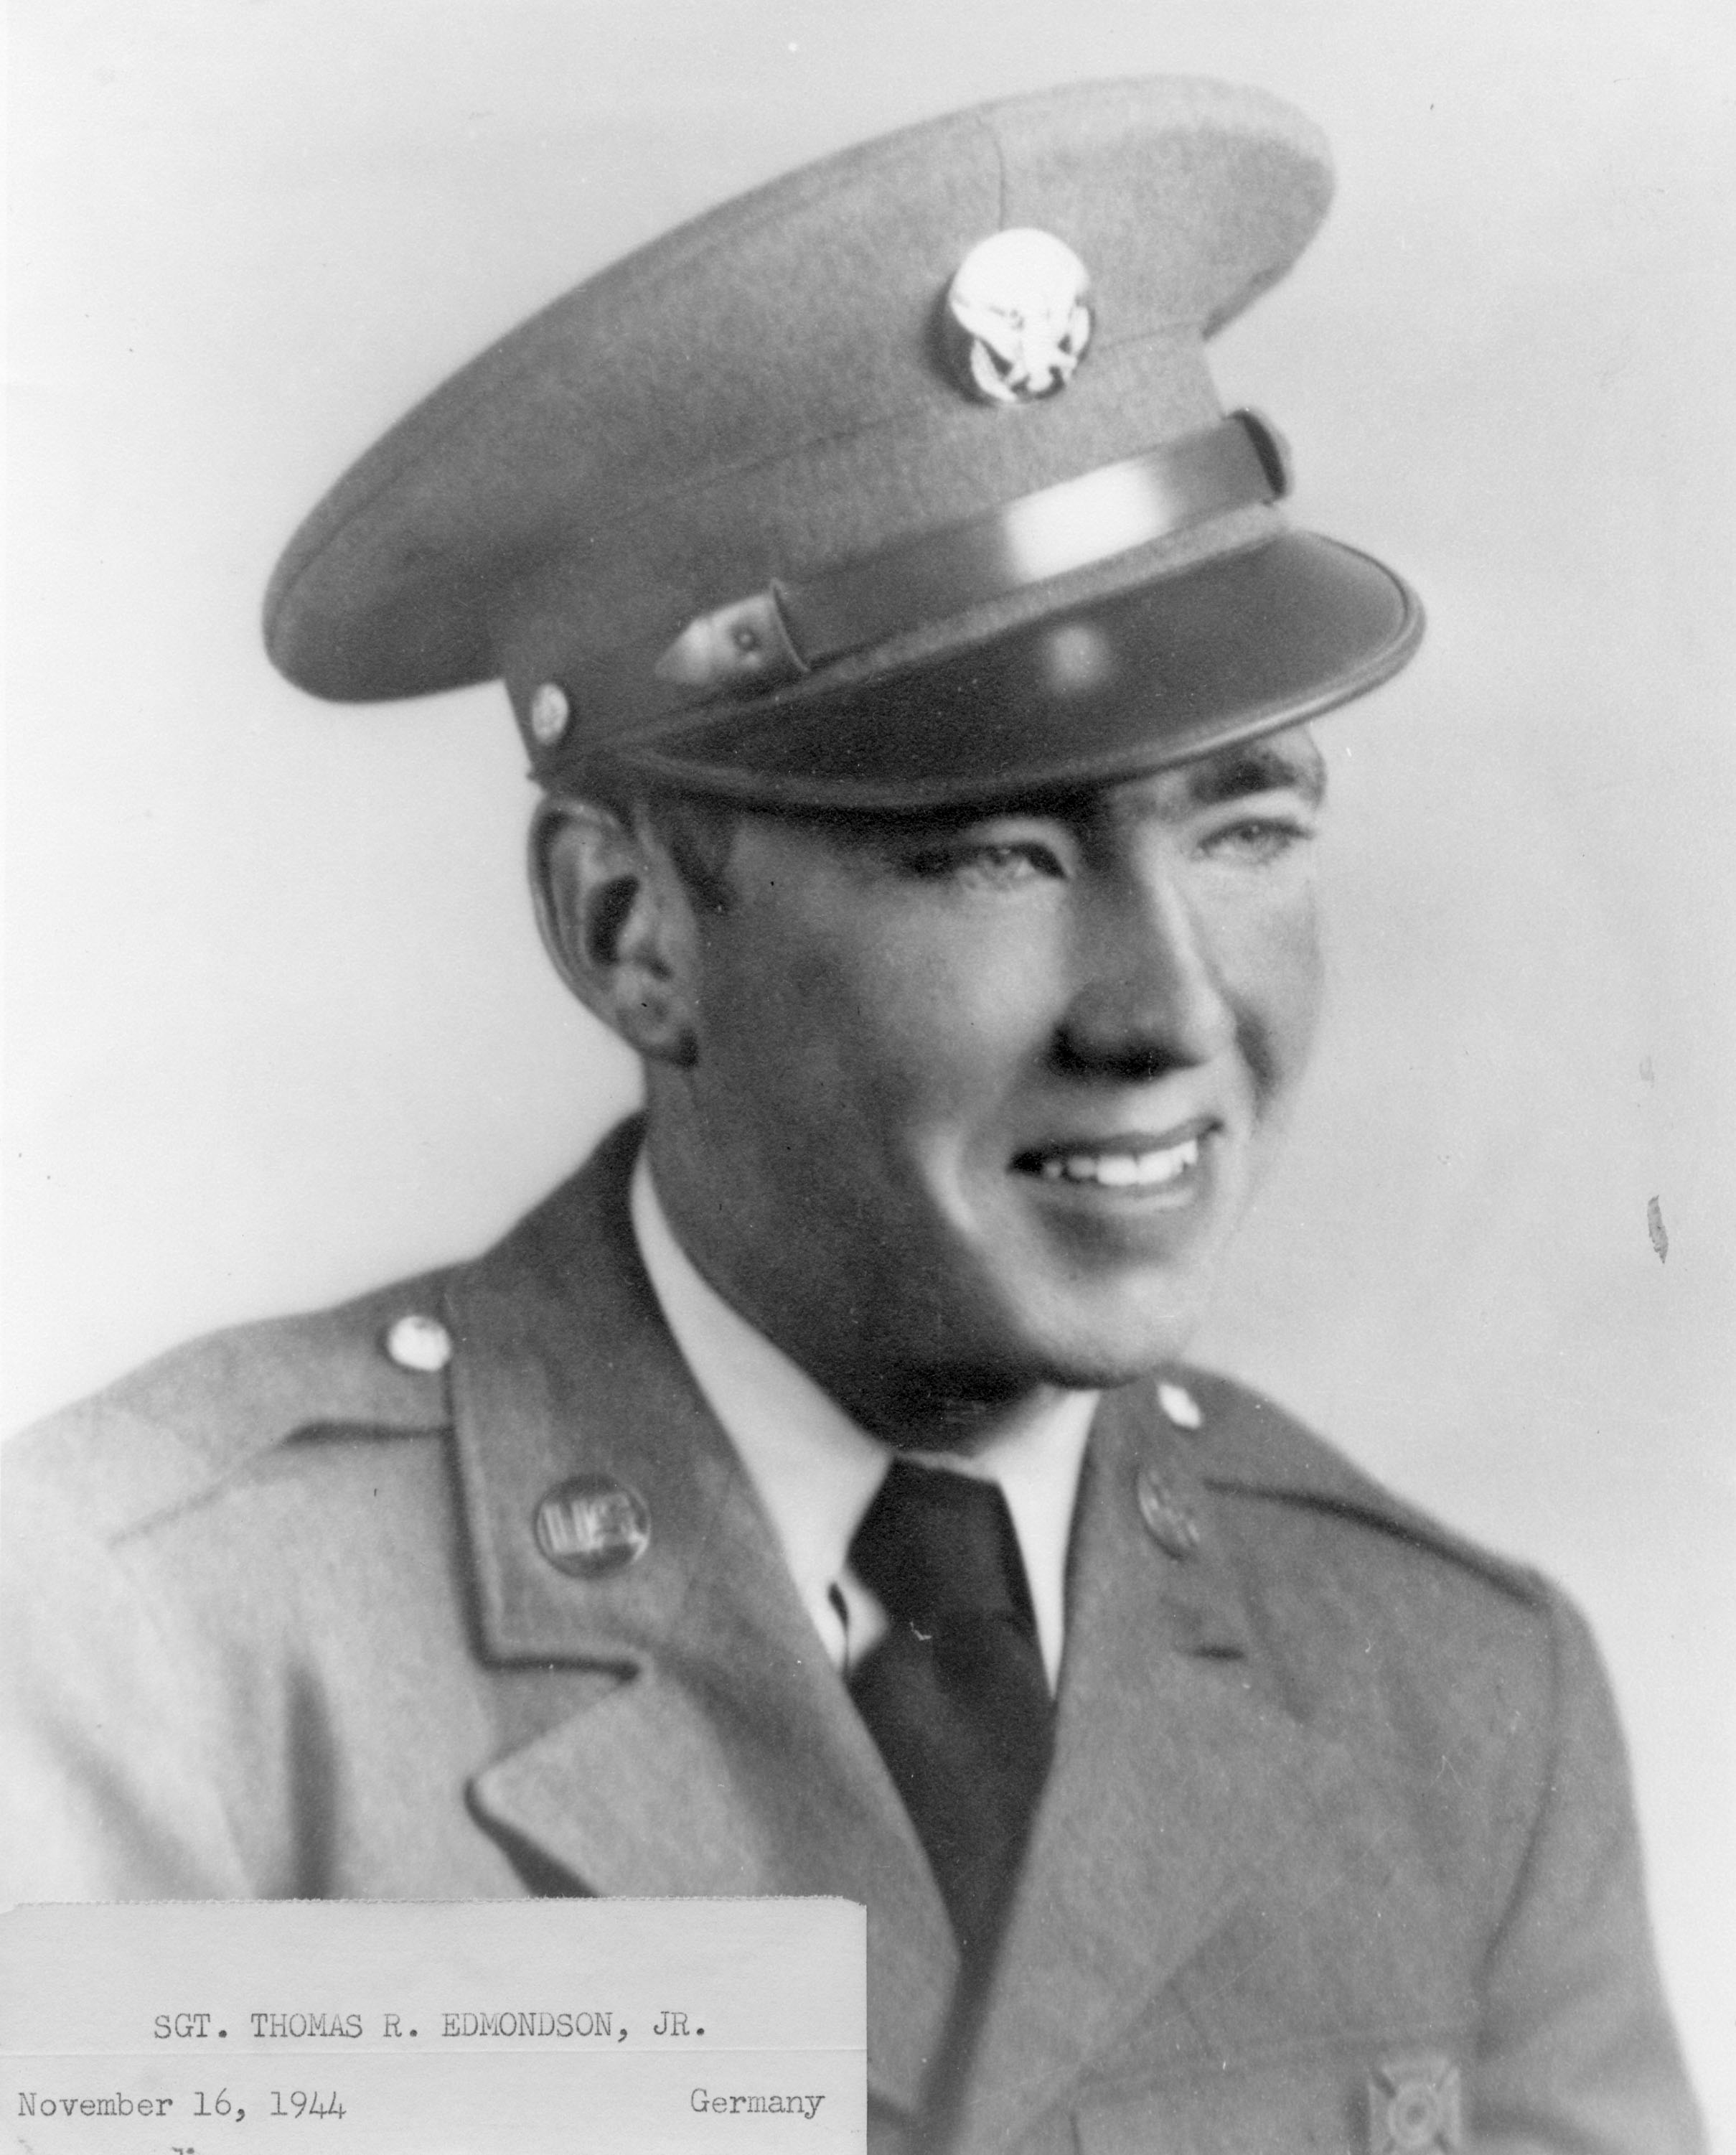 Sgt. Thomas R. Edmondson, Jr.